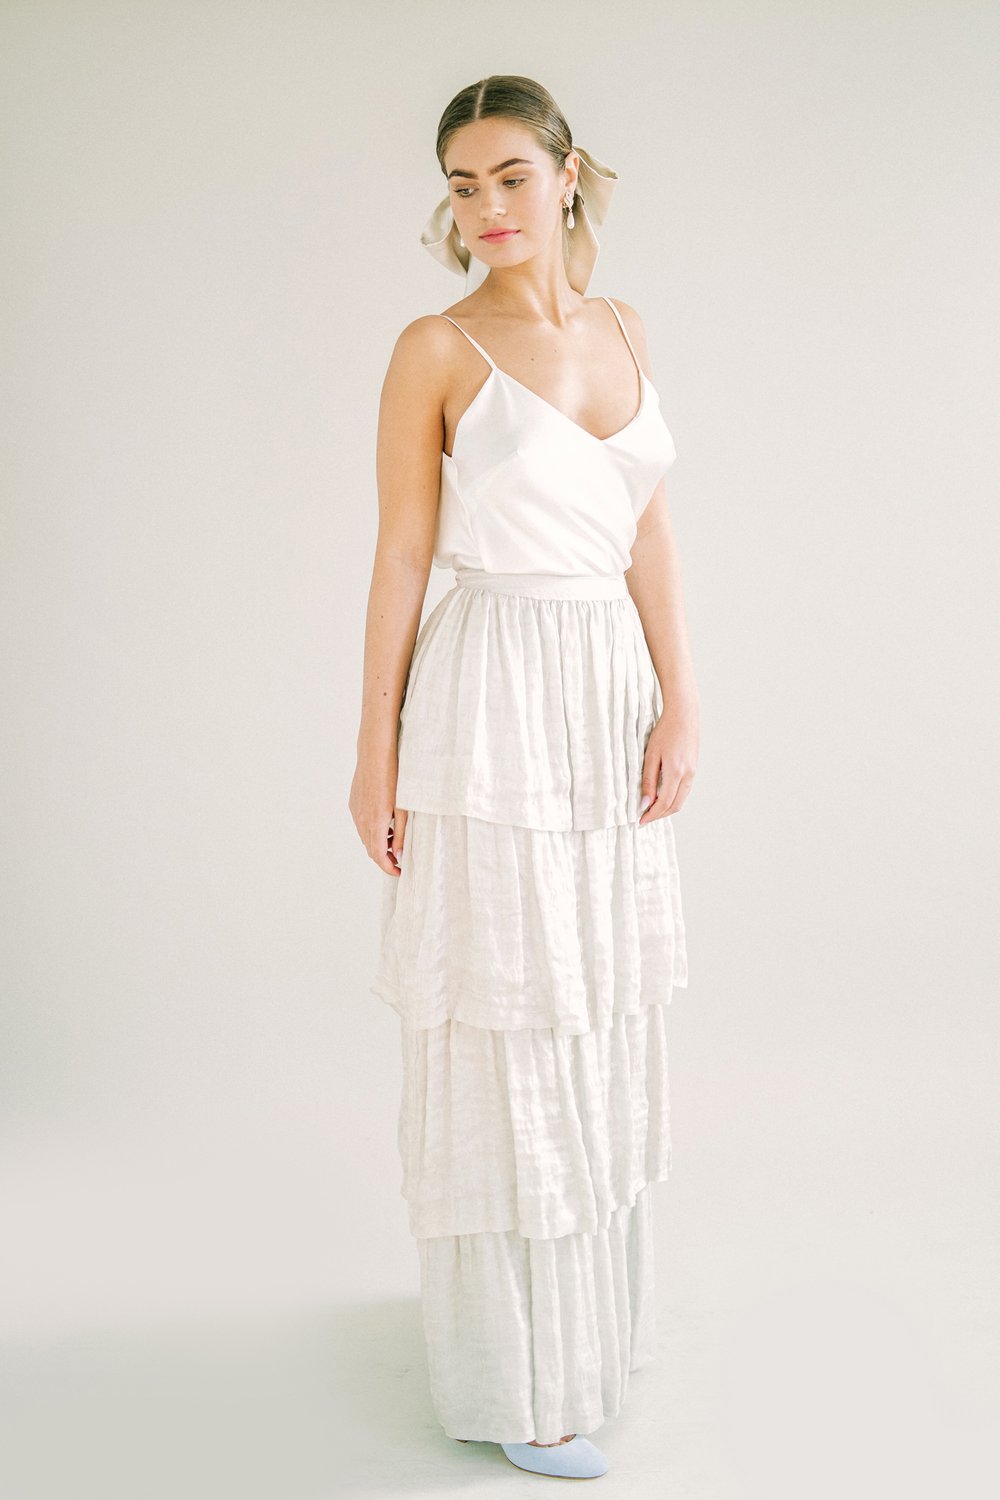 SomethingBlue-Kate-Beaumont-wedding-dresses-Emma-Pilkington-Photography-49.jpg